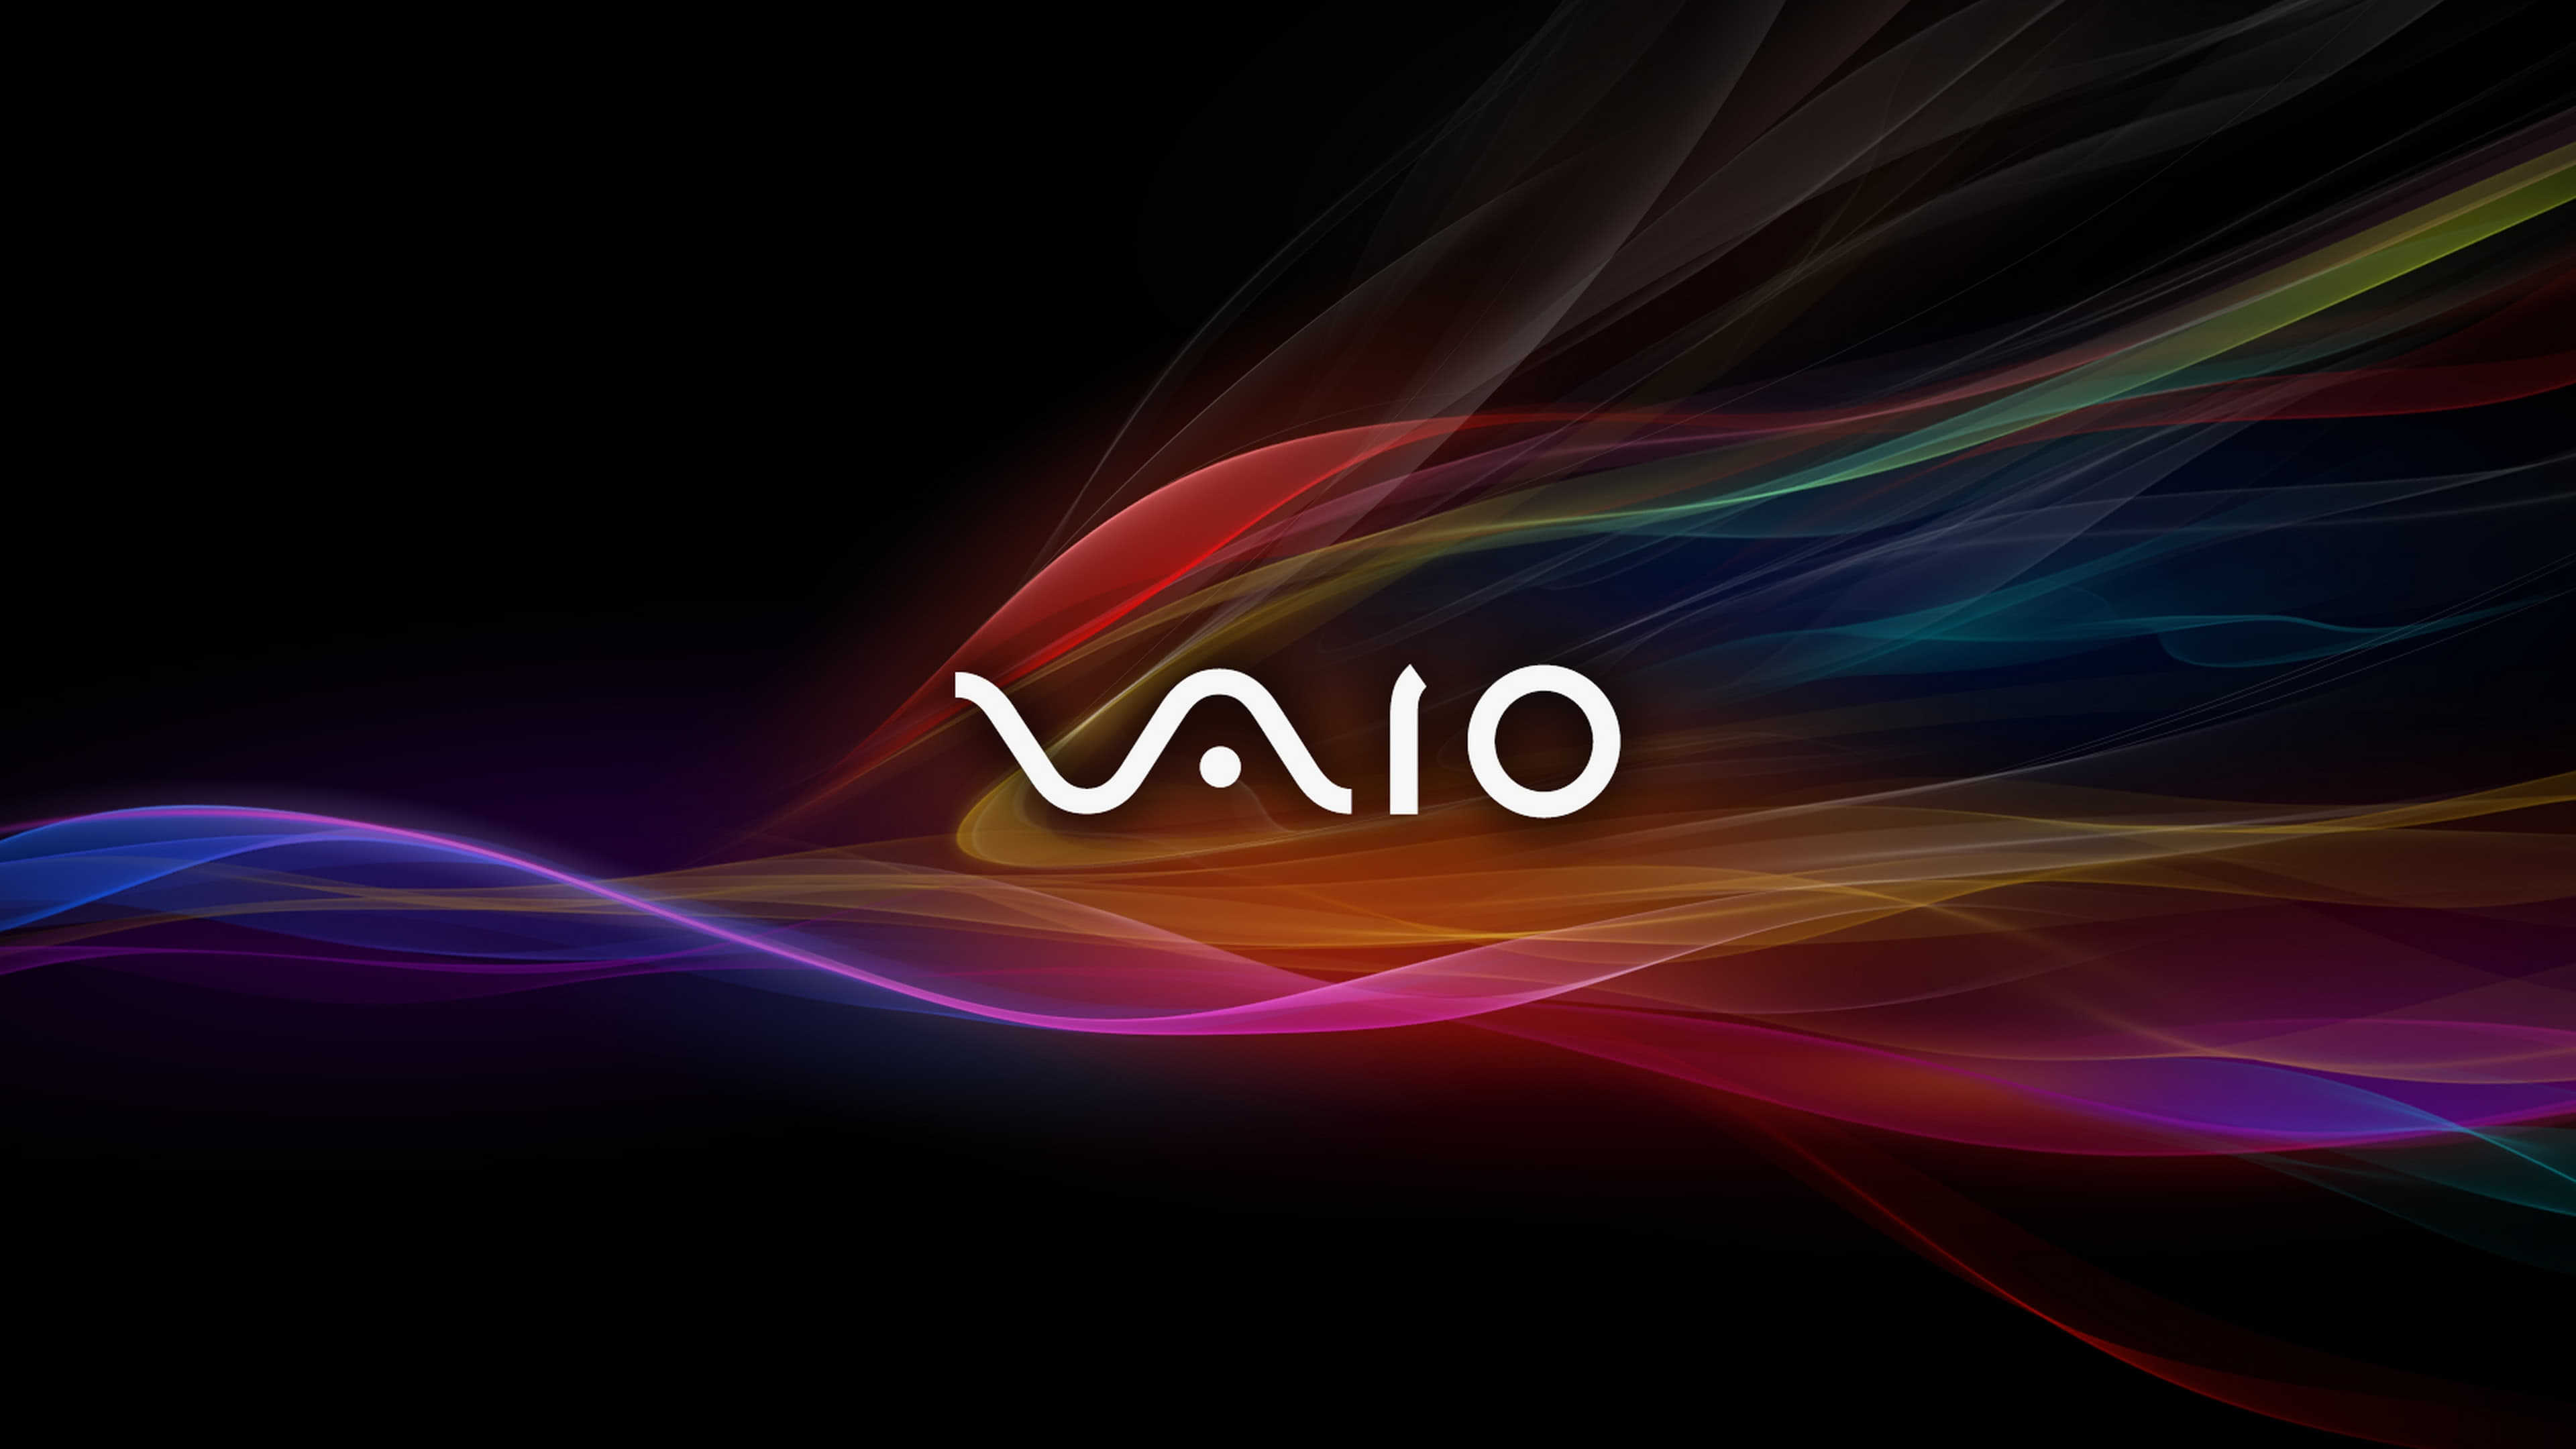 Vaio Logo - Sony Vaio Logo UHD 4K Wallpaper